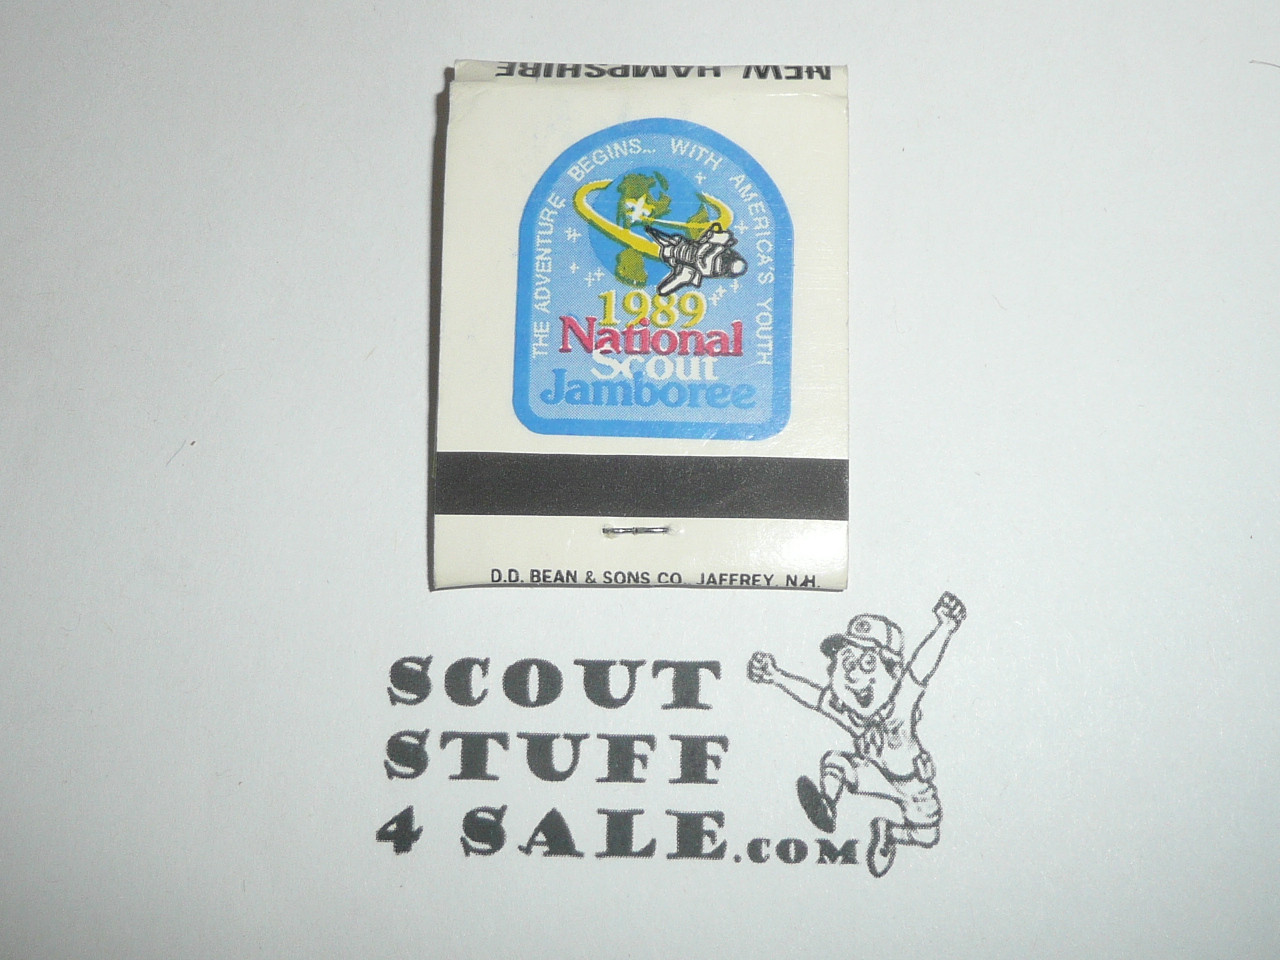 1989 National Jamboree Daniel Webster Council Book of Matches